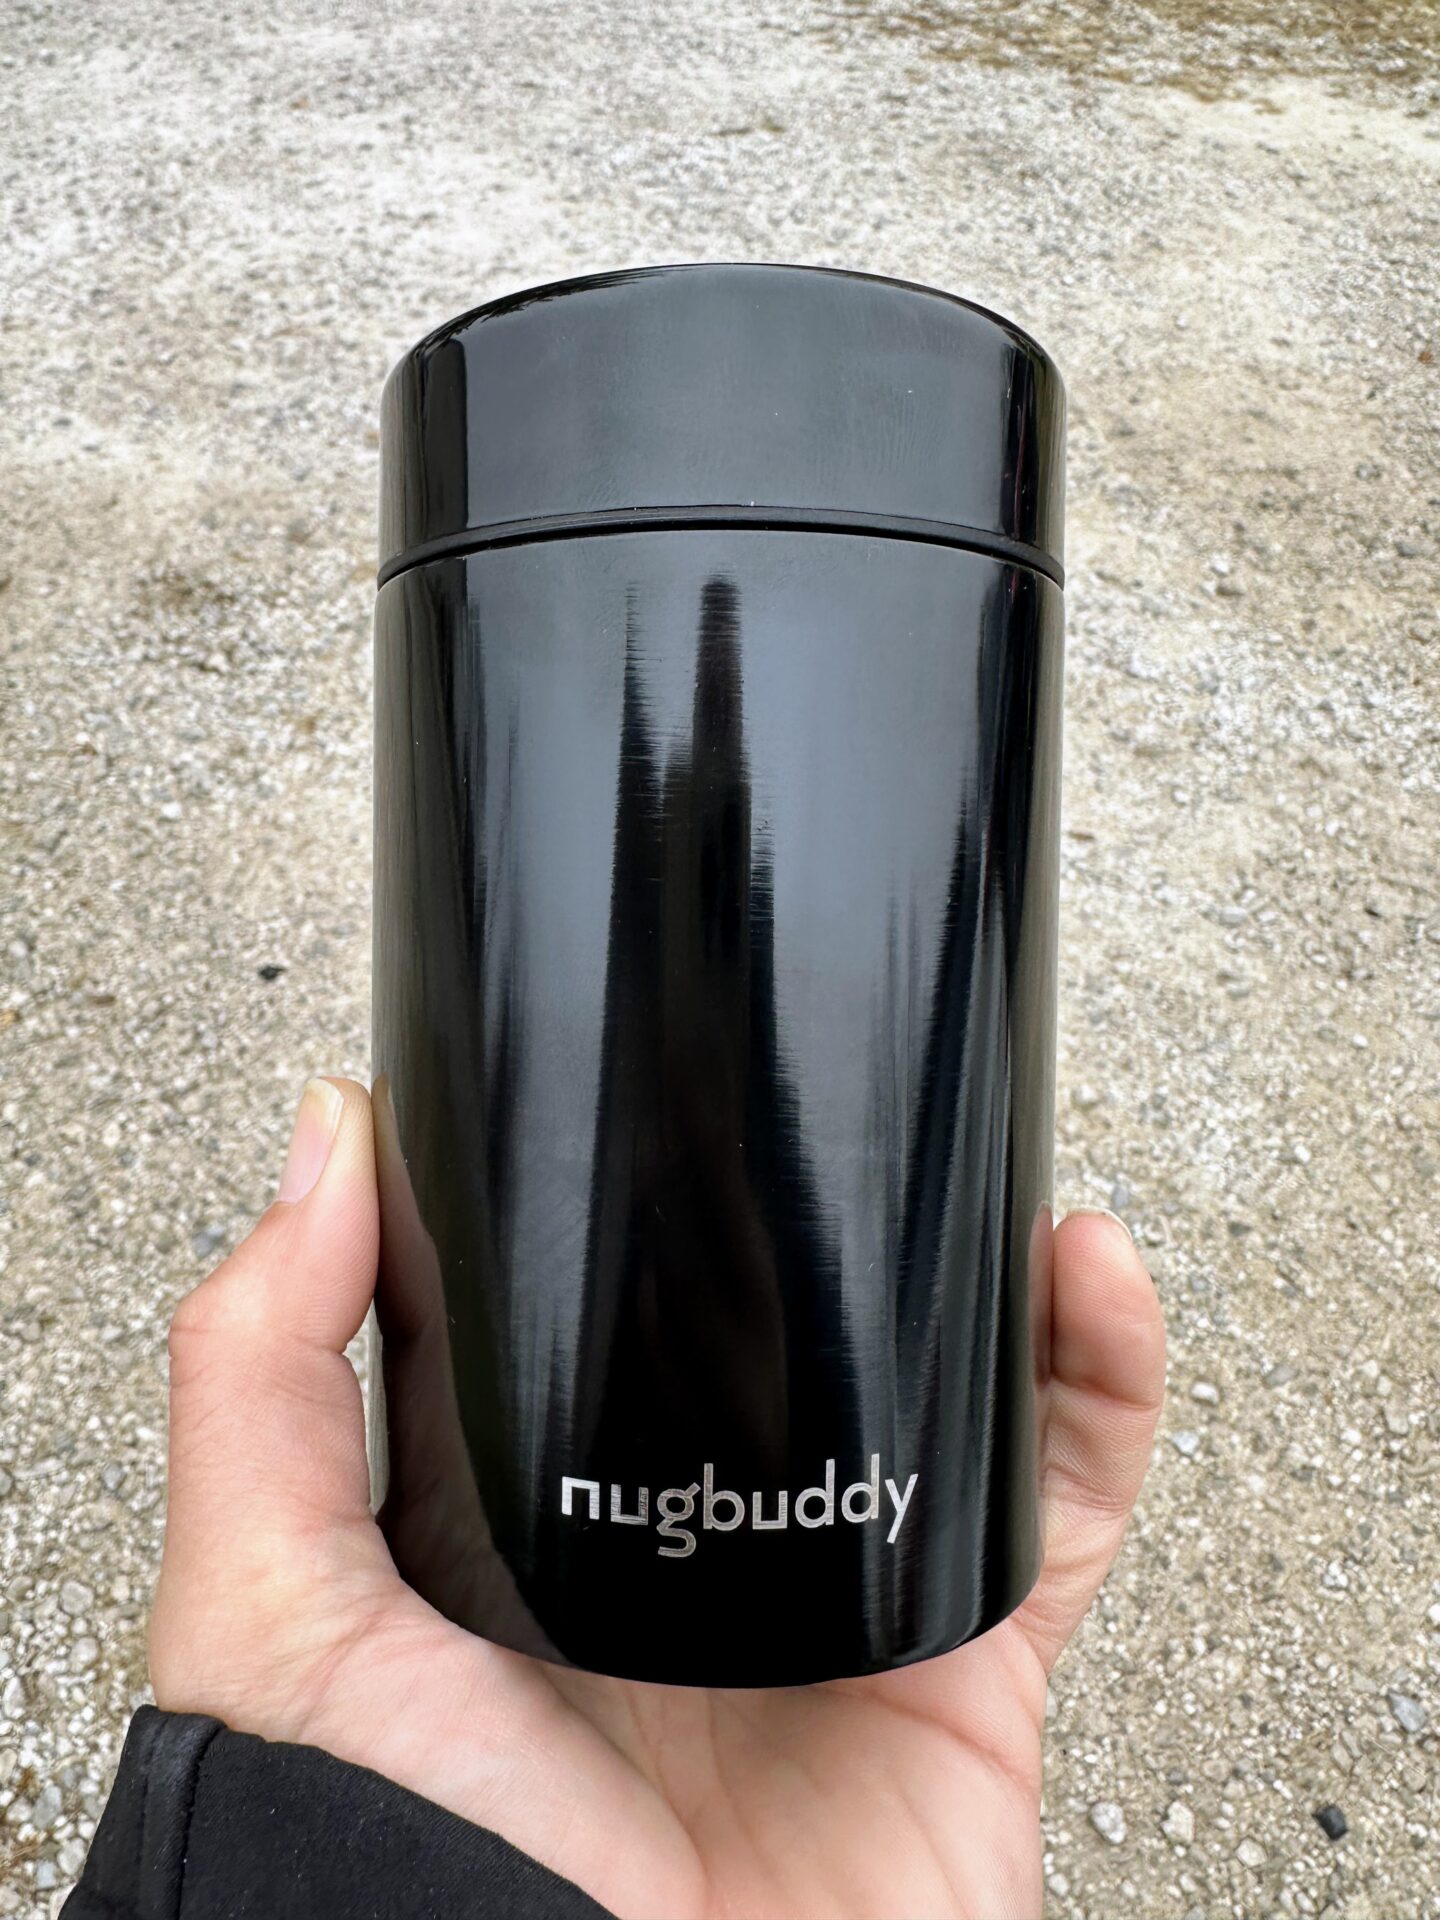 Nugbuddy in the wild